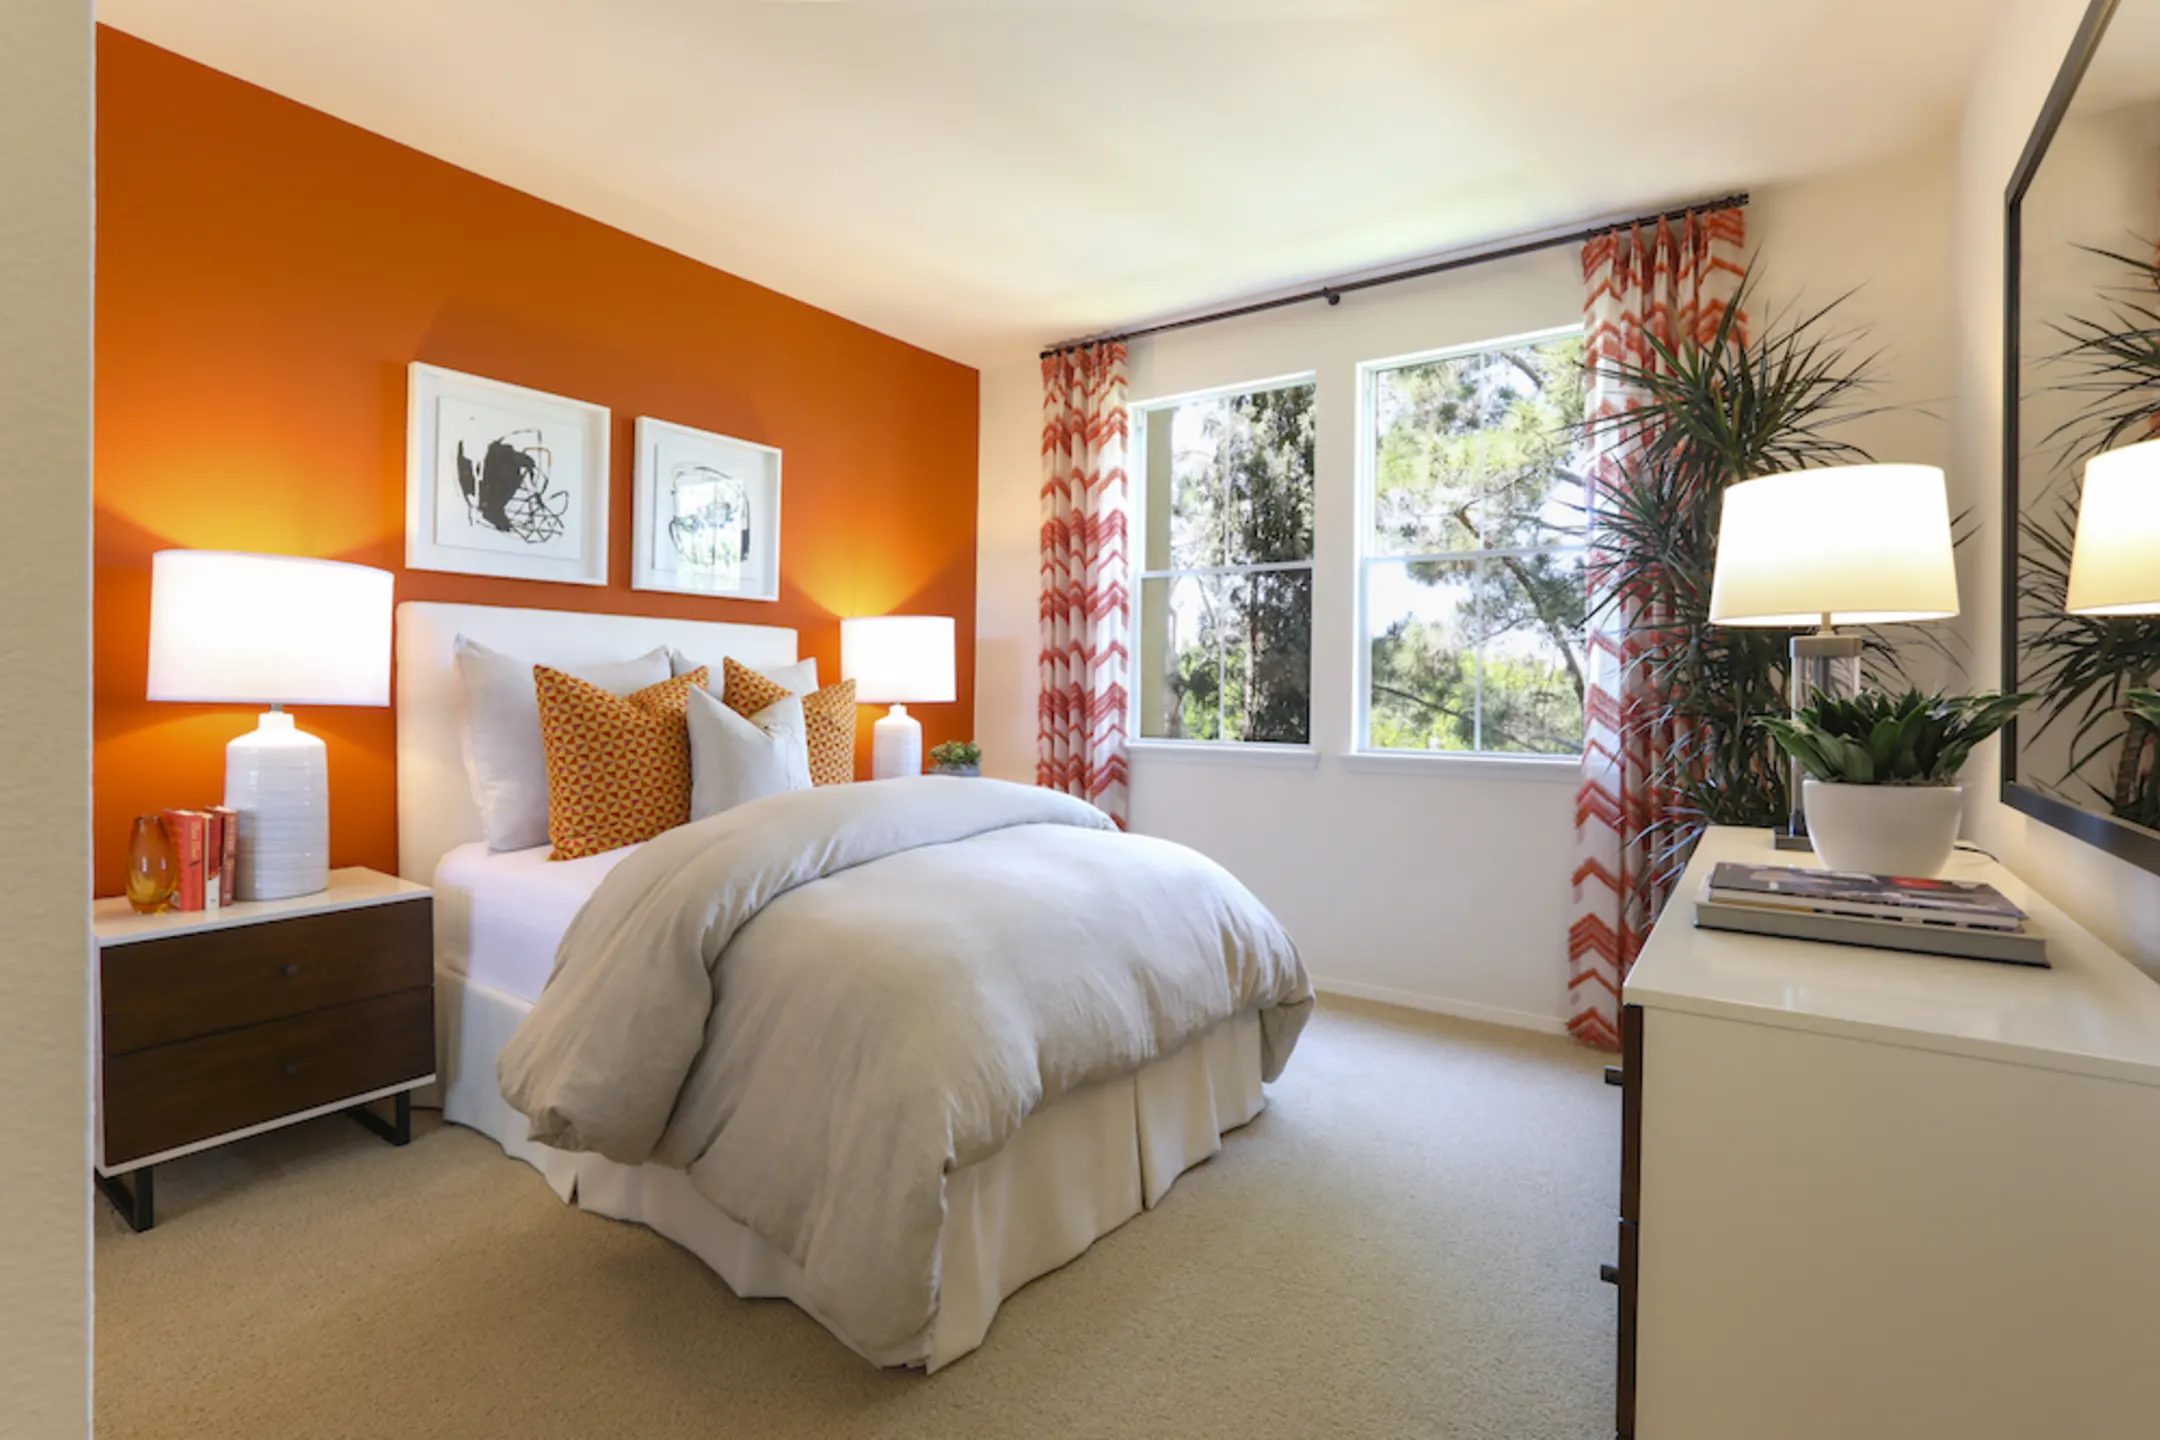 Bedroom - Newport Bluffs - Newport Beach, CA